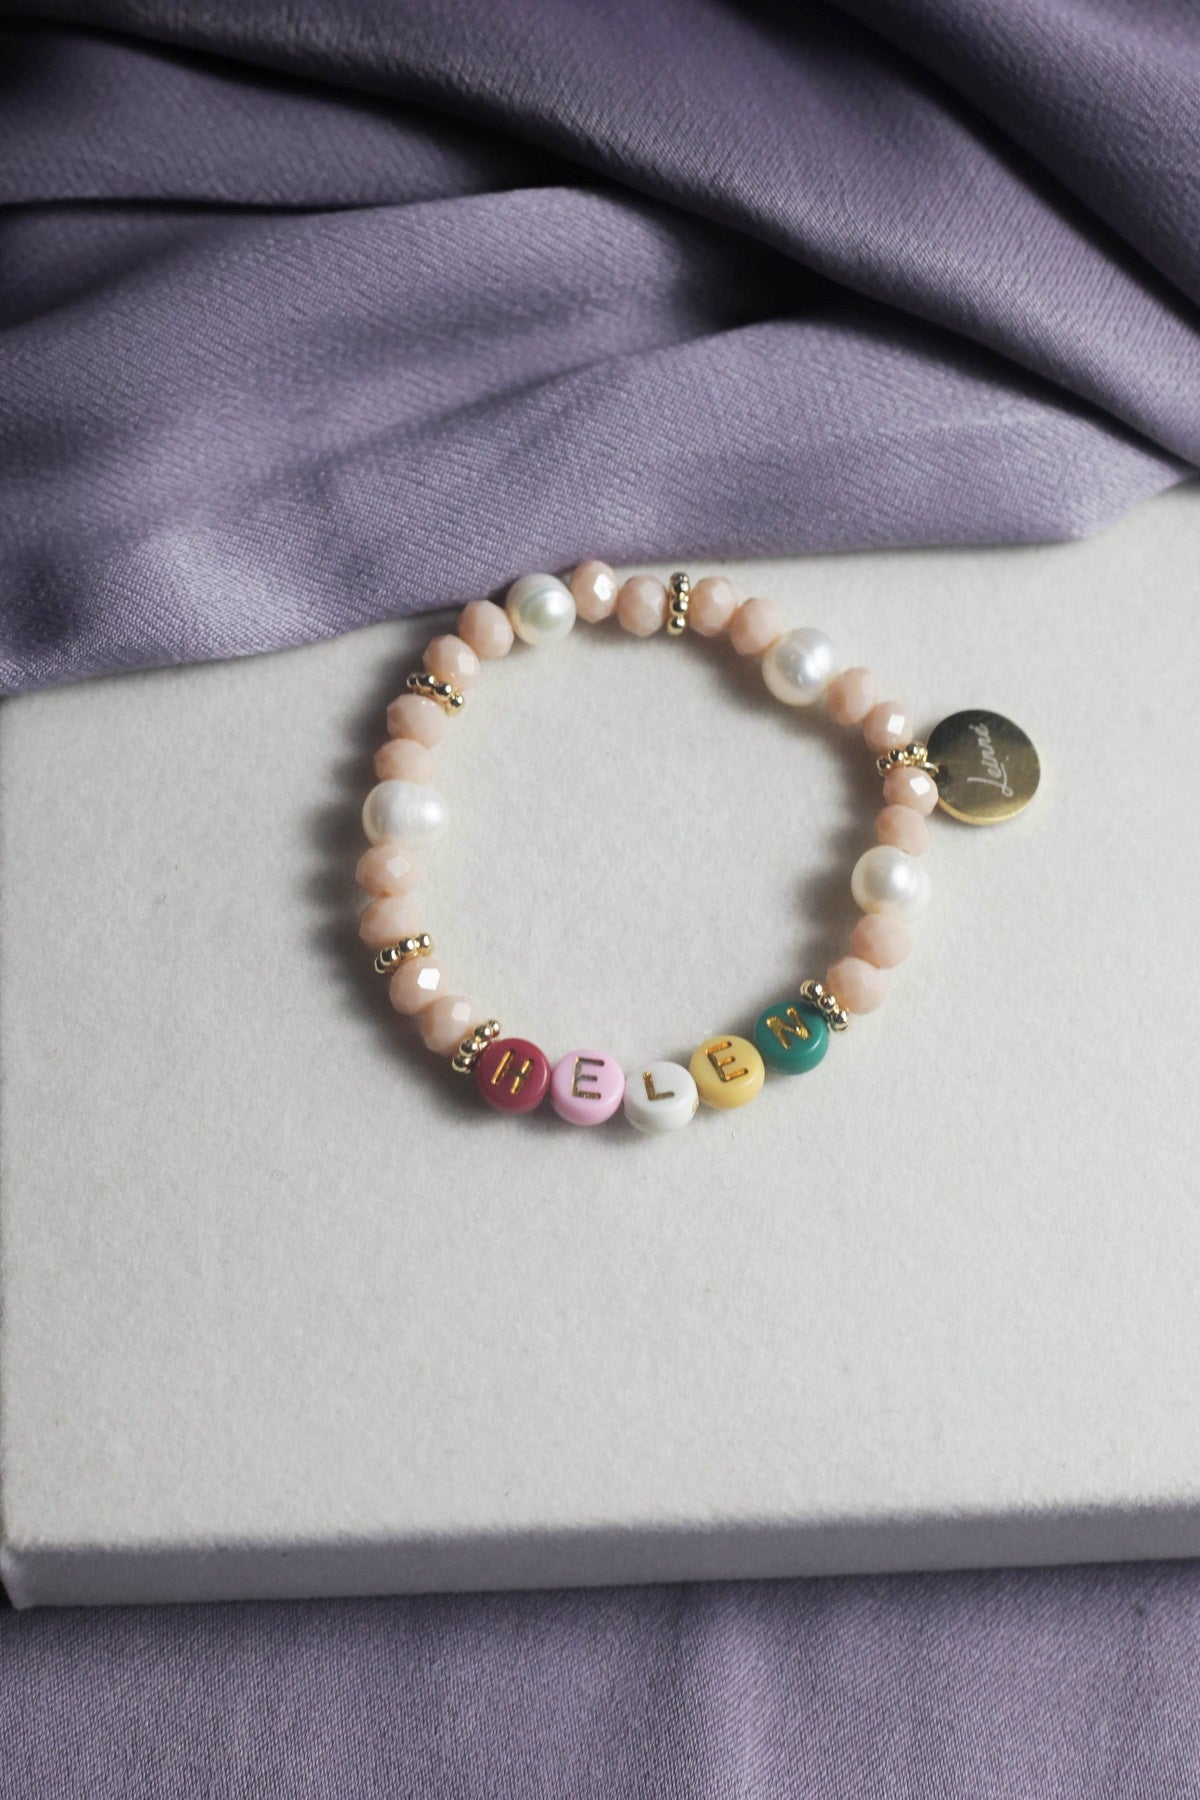 Candy_pearl_personalized_bracelet.jpg